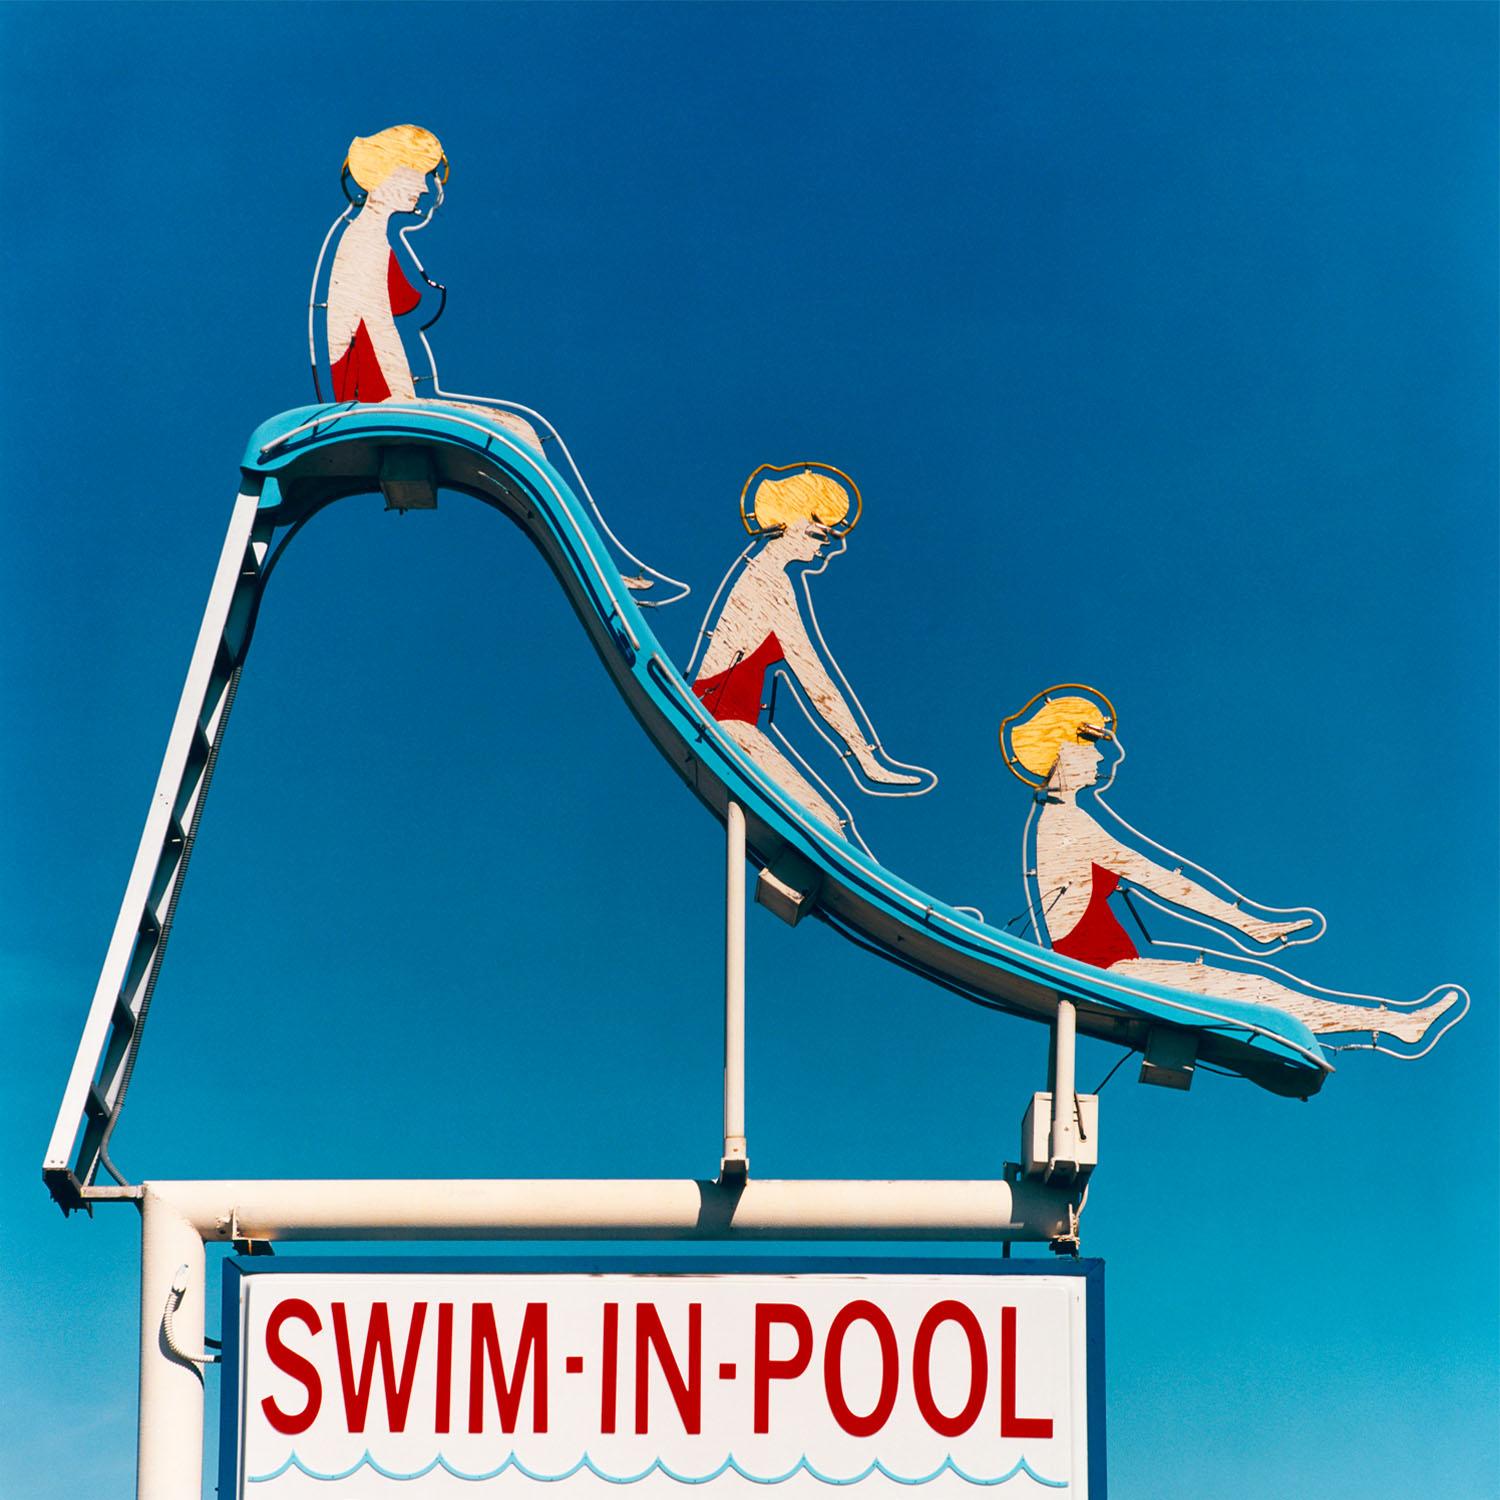 Richard Heeps Print – Swim-in-Pool, Las Vegas, Nevada - Americana Pop Art Farbfotografie